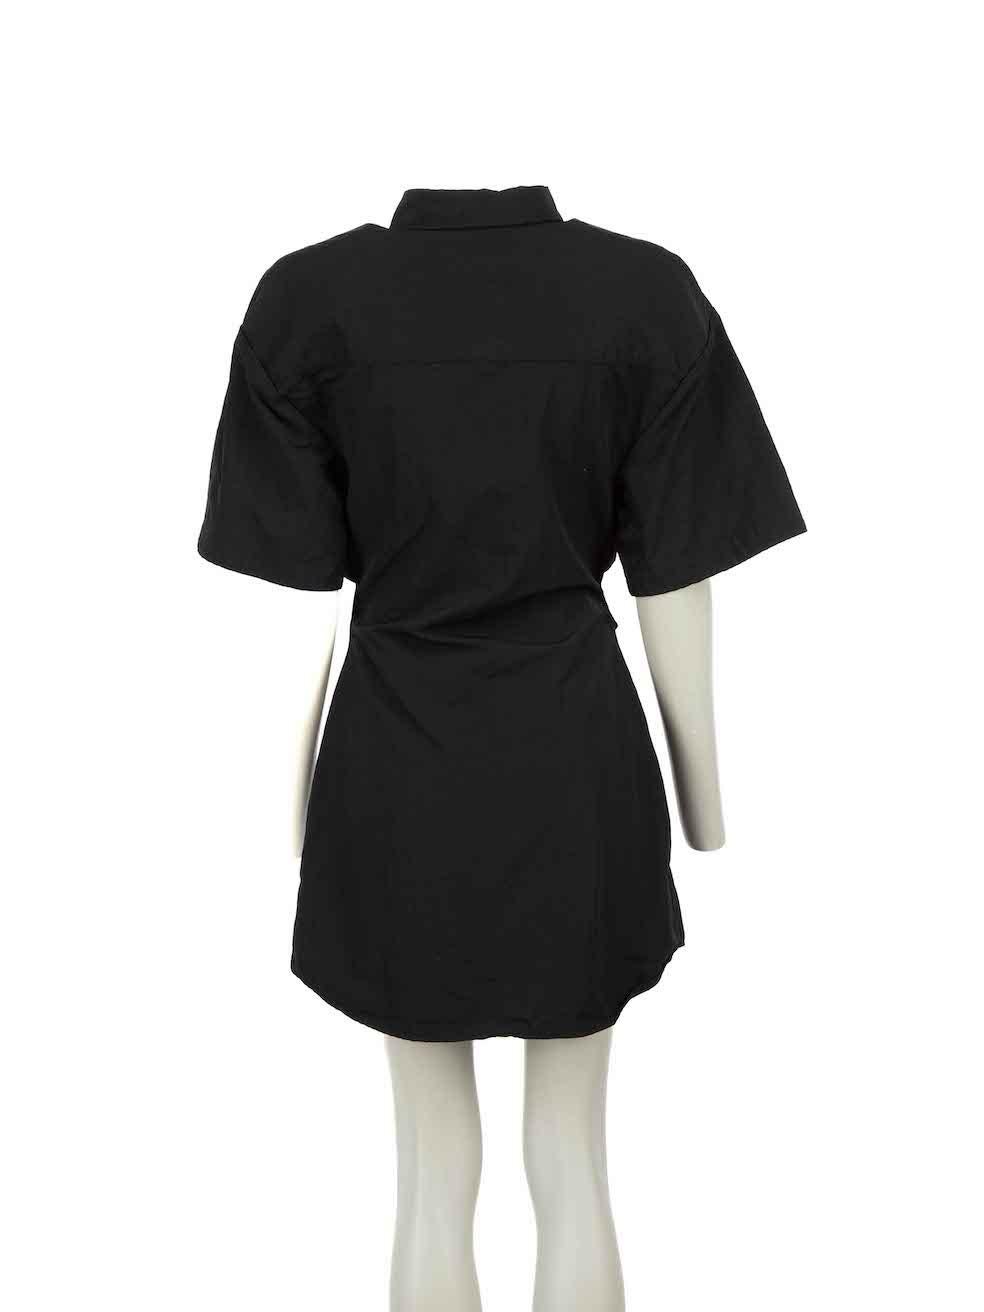 Jacquemus Black La Montagne Cut Out Shirt Dress Size M In Excellent Condition For Sale In London, GB